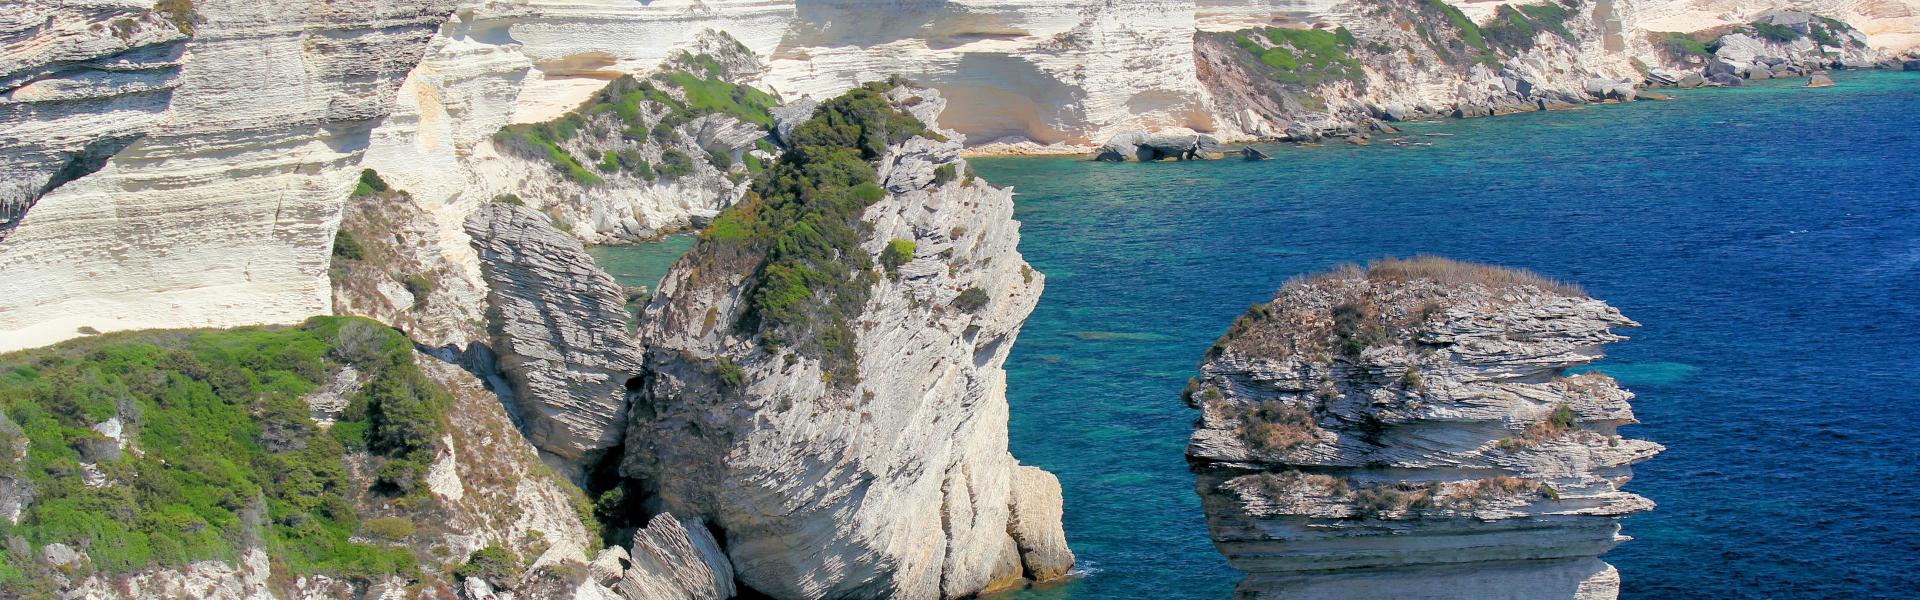 Location de vacances à Pigna - Haute-Corse - amivac